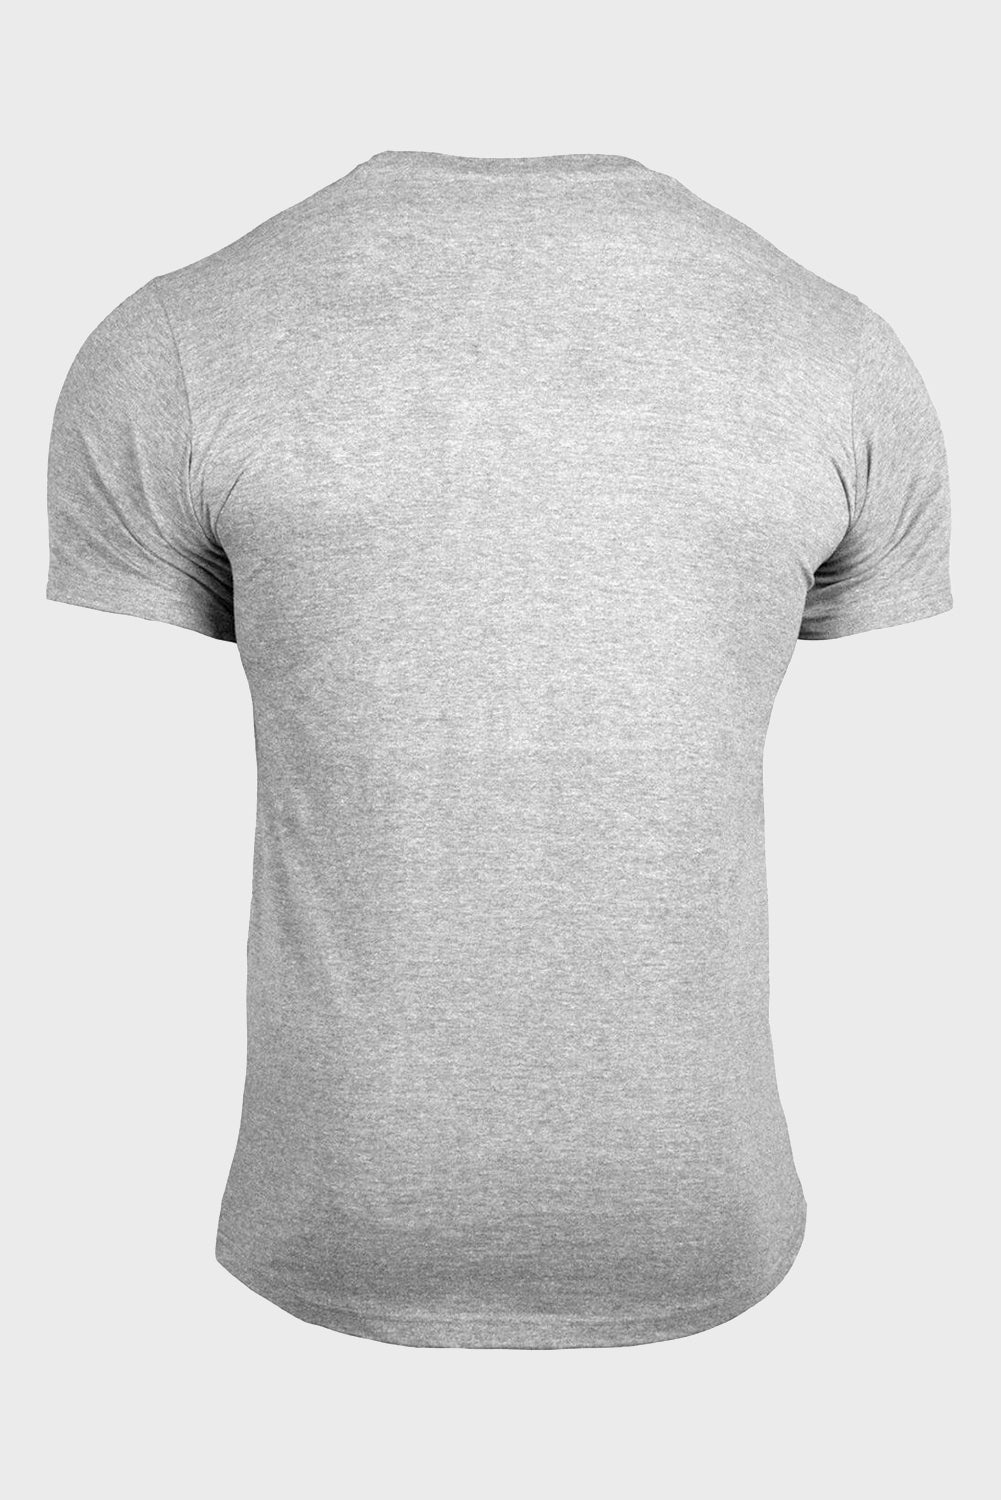 Gray Dog Letter Graphic Print Muscle Fit Men's T Shirt Men's Tops JT's Designer Fashion